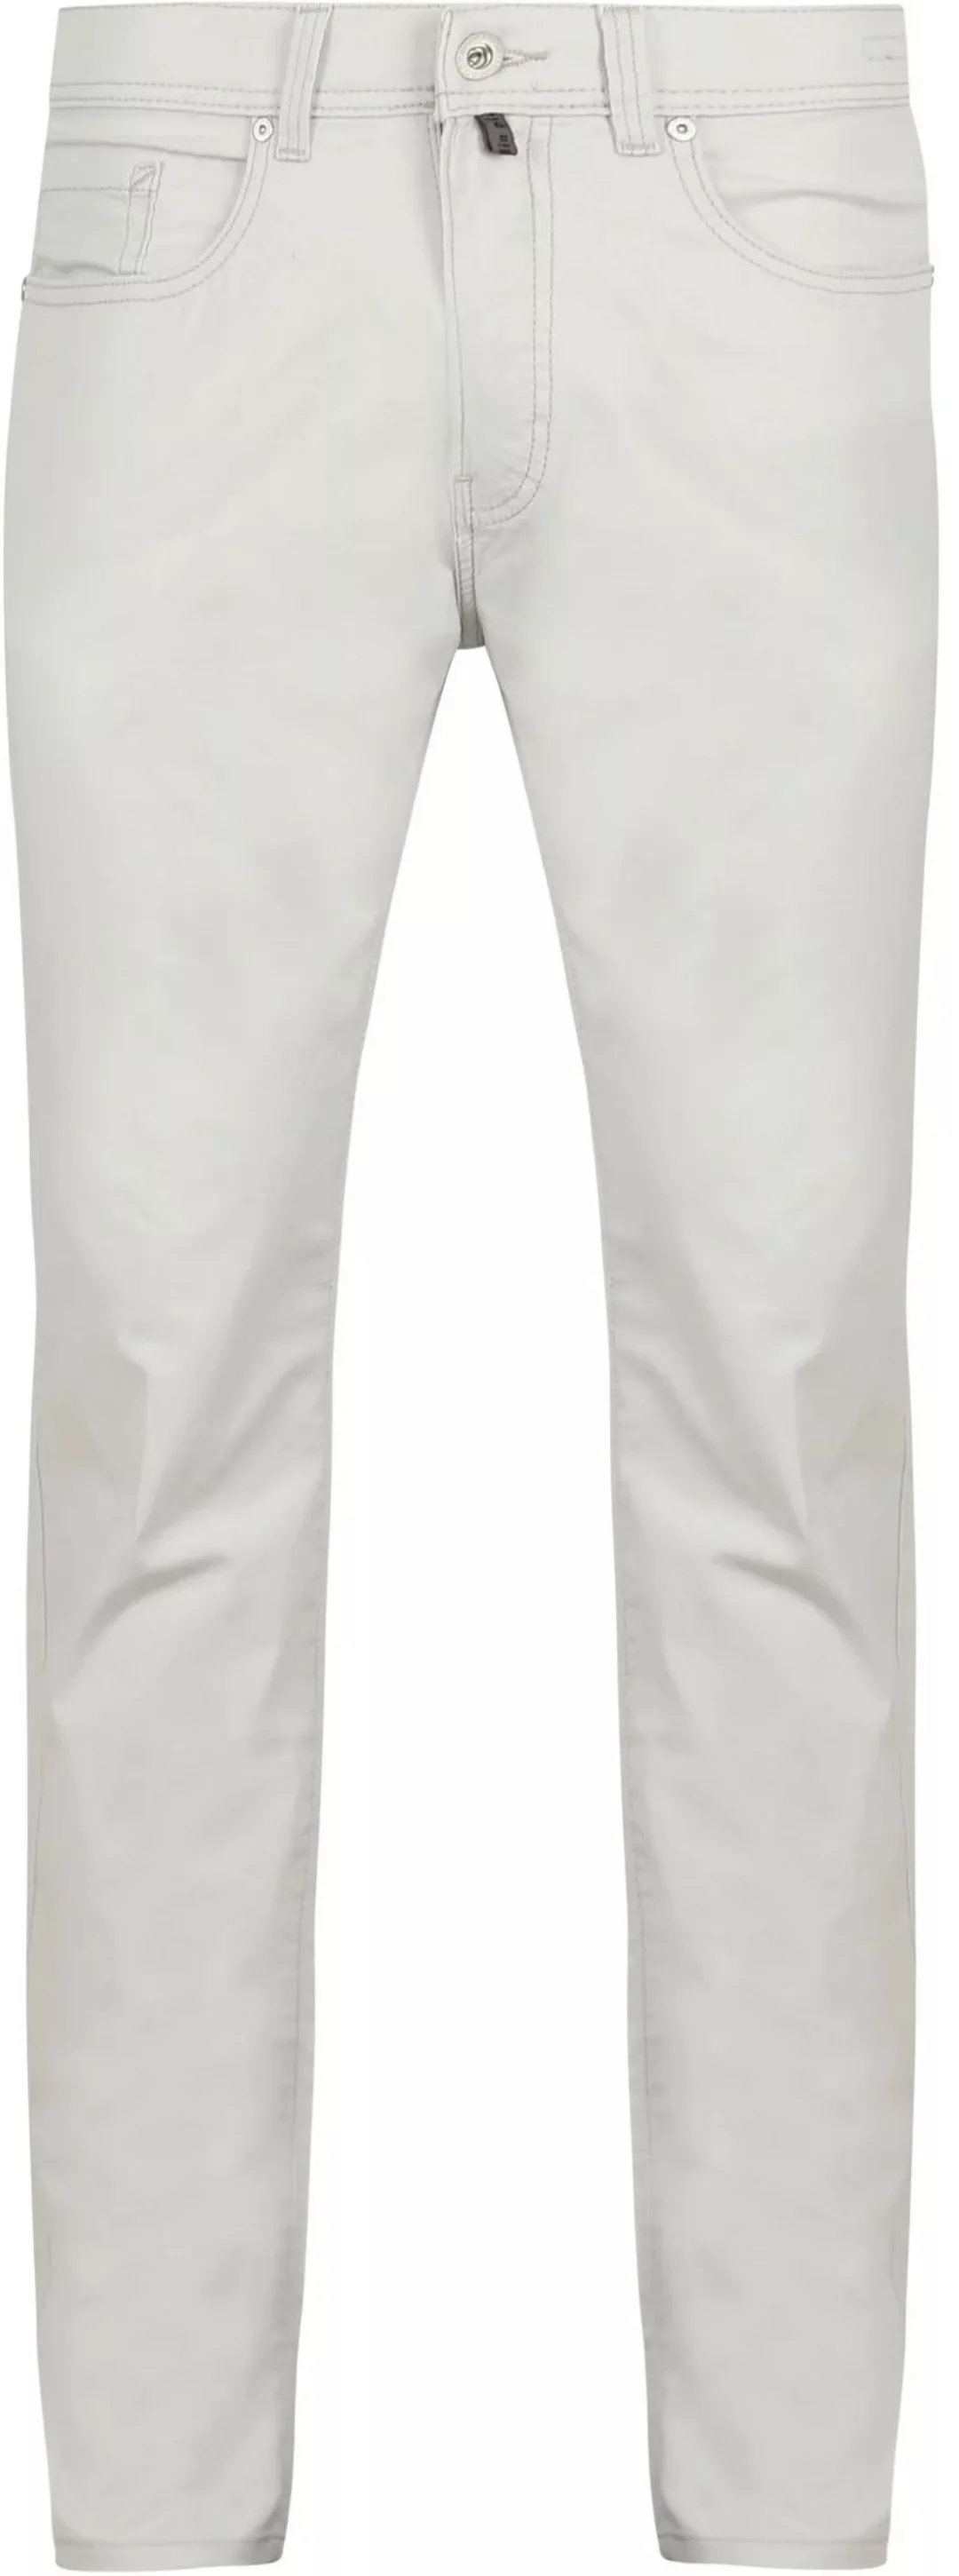 Pierre Cardin Trousers Lyon Tapered Hellgrau - Größe W 32 - L 32 günstig online kaufen